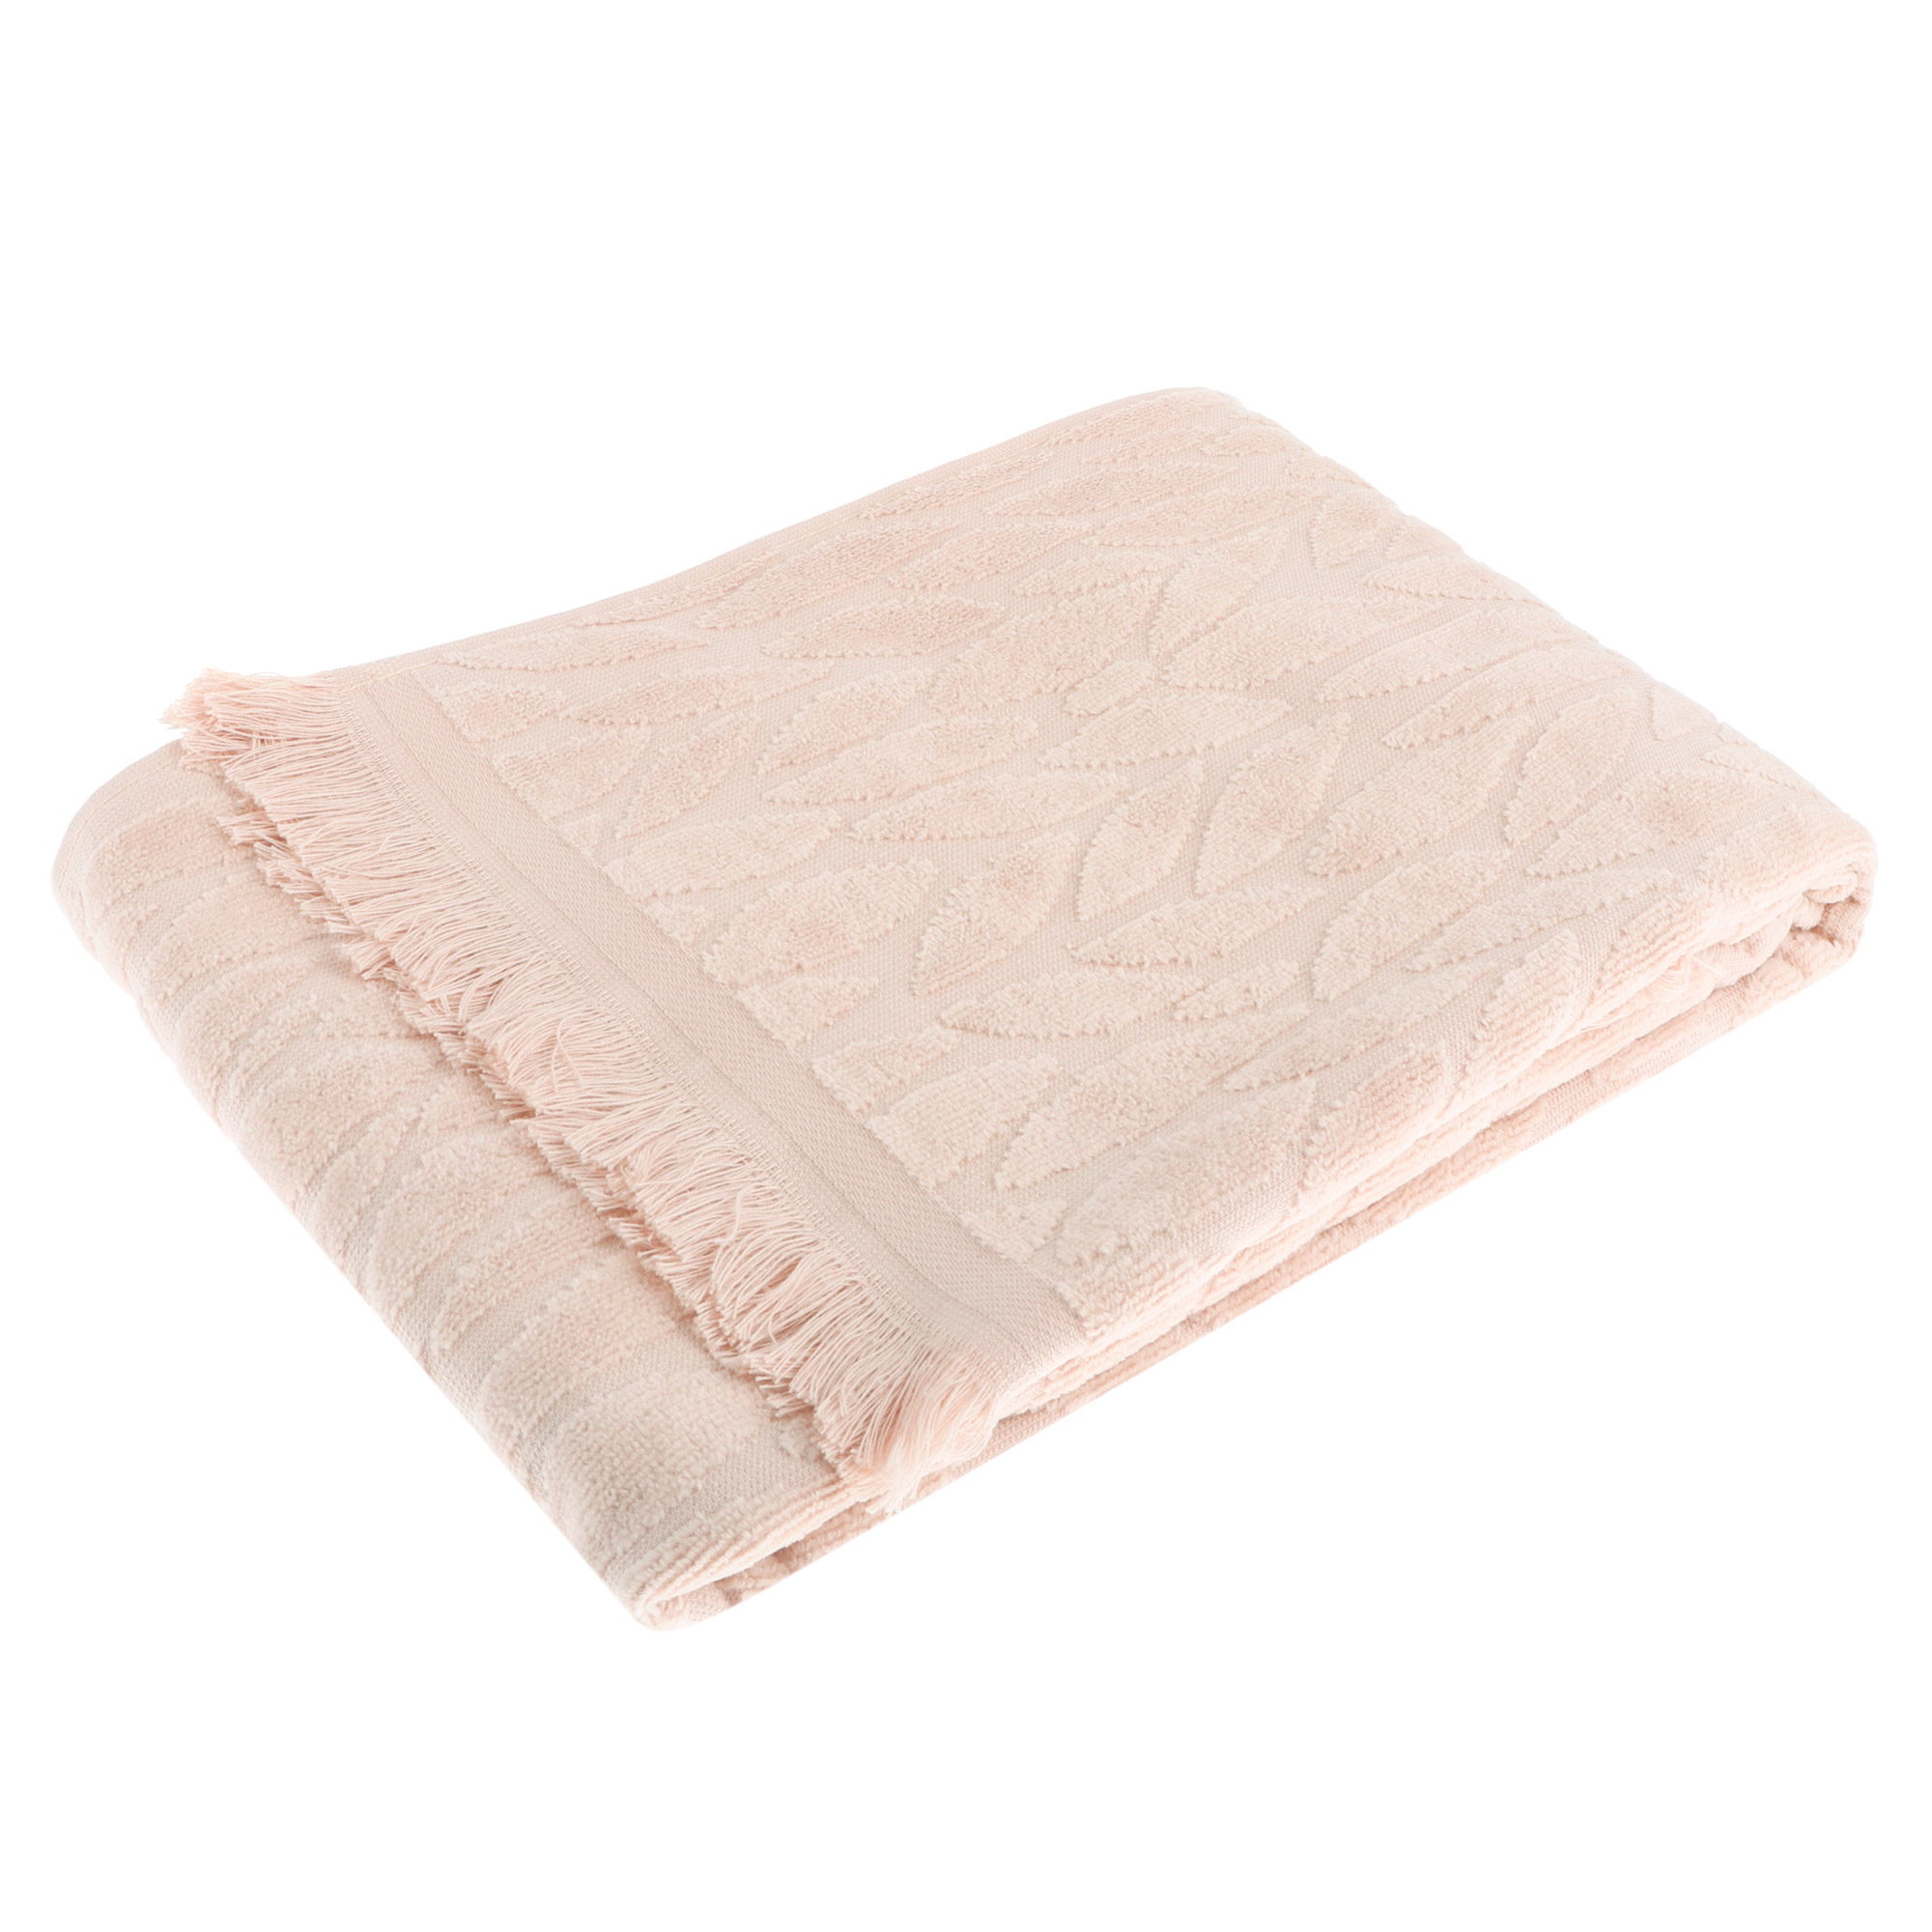 Полотенце махровое Cleanelly корона 50х100 гладкокрашенное с эффектом велюра персиковый полотенце классик персиковый р 33х60